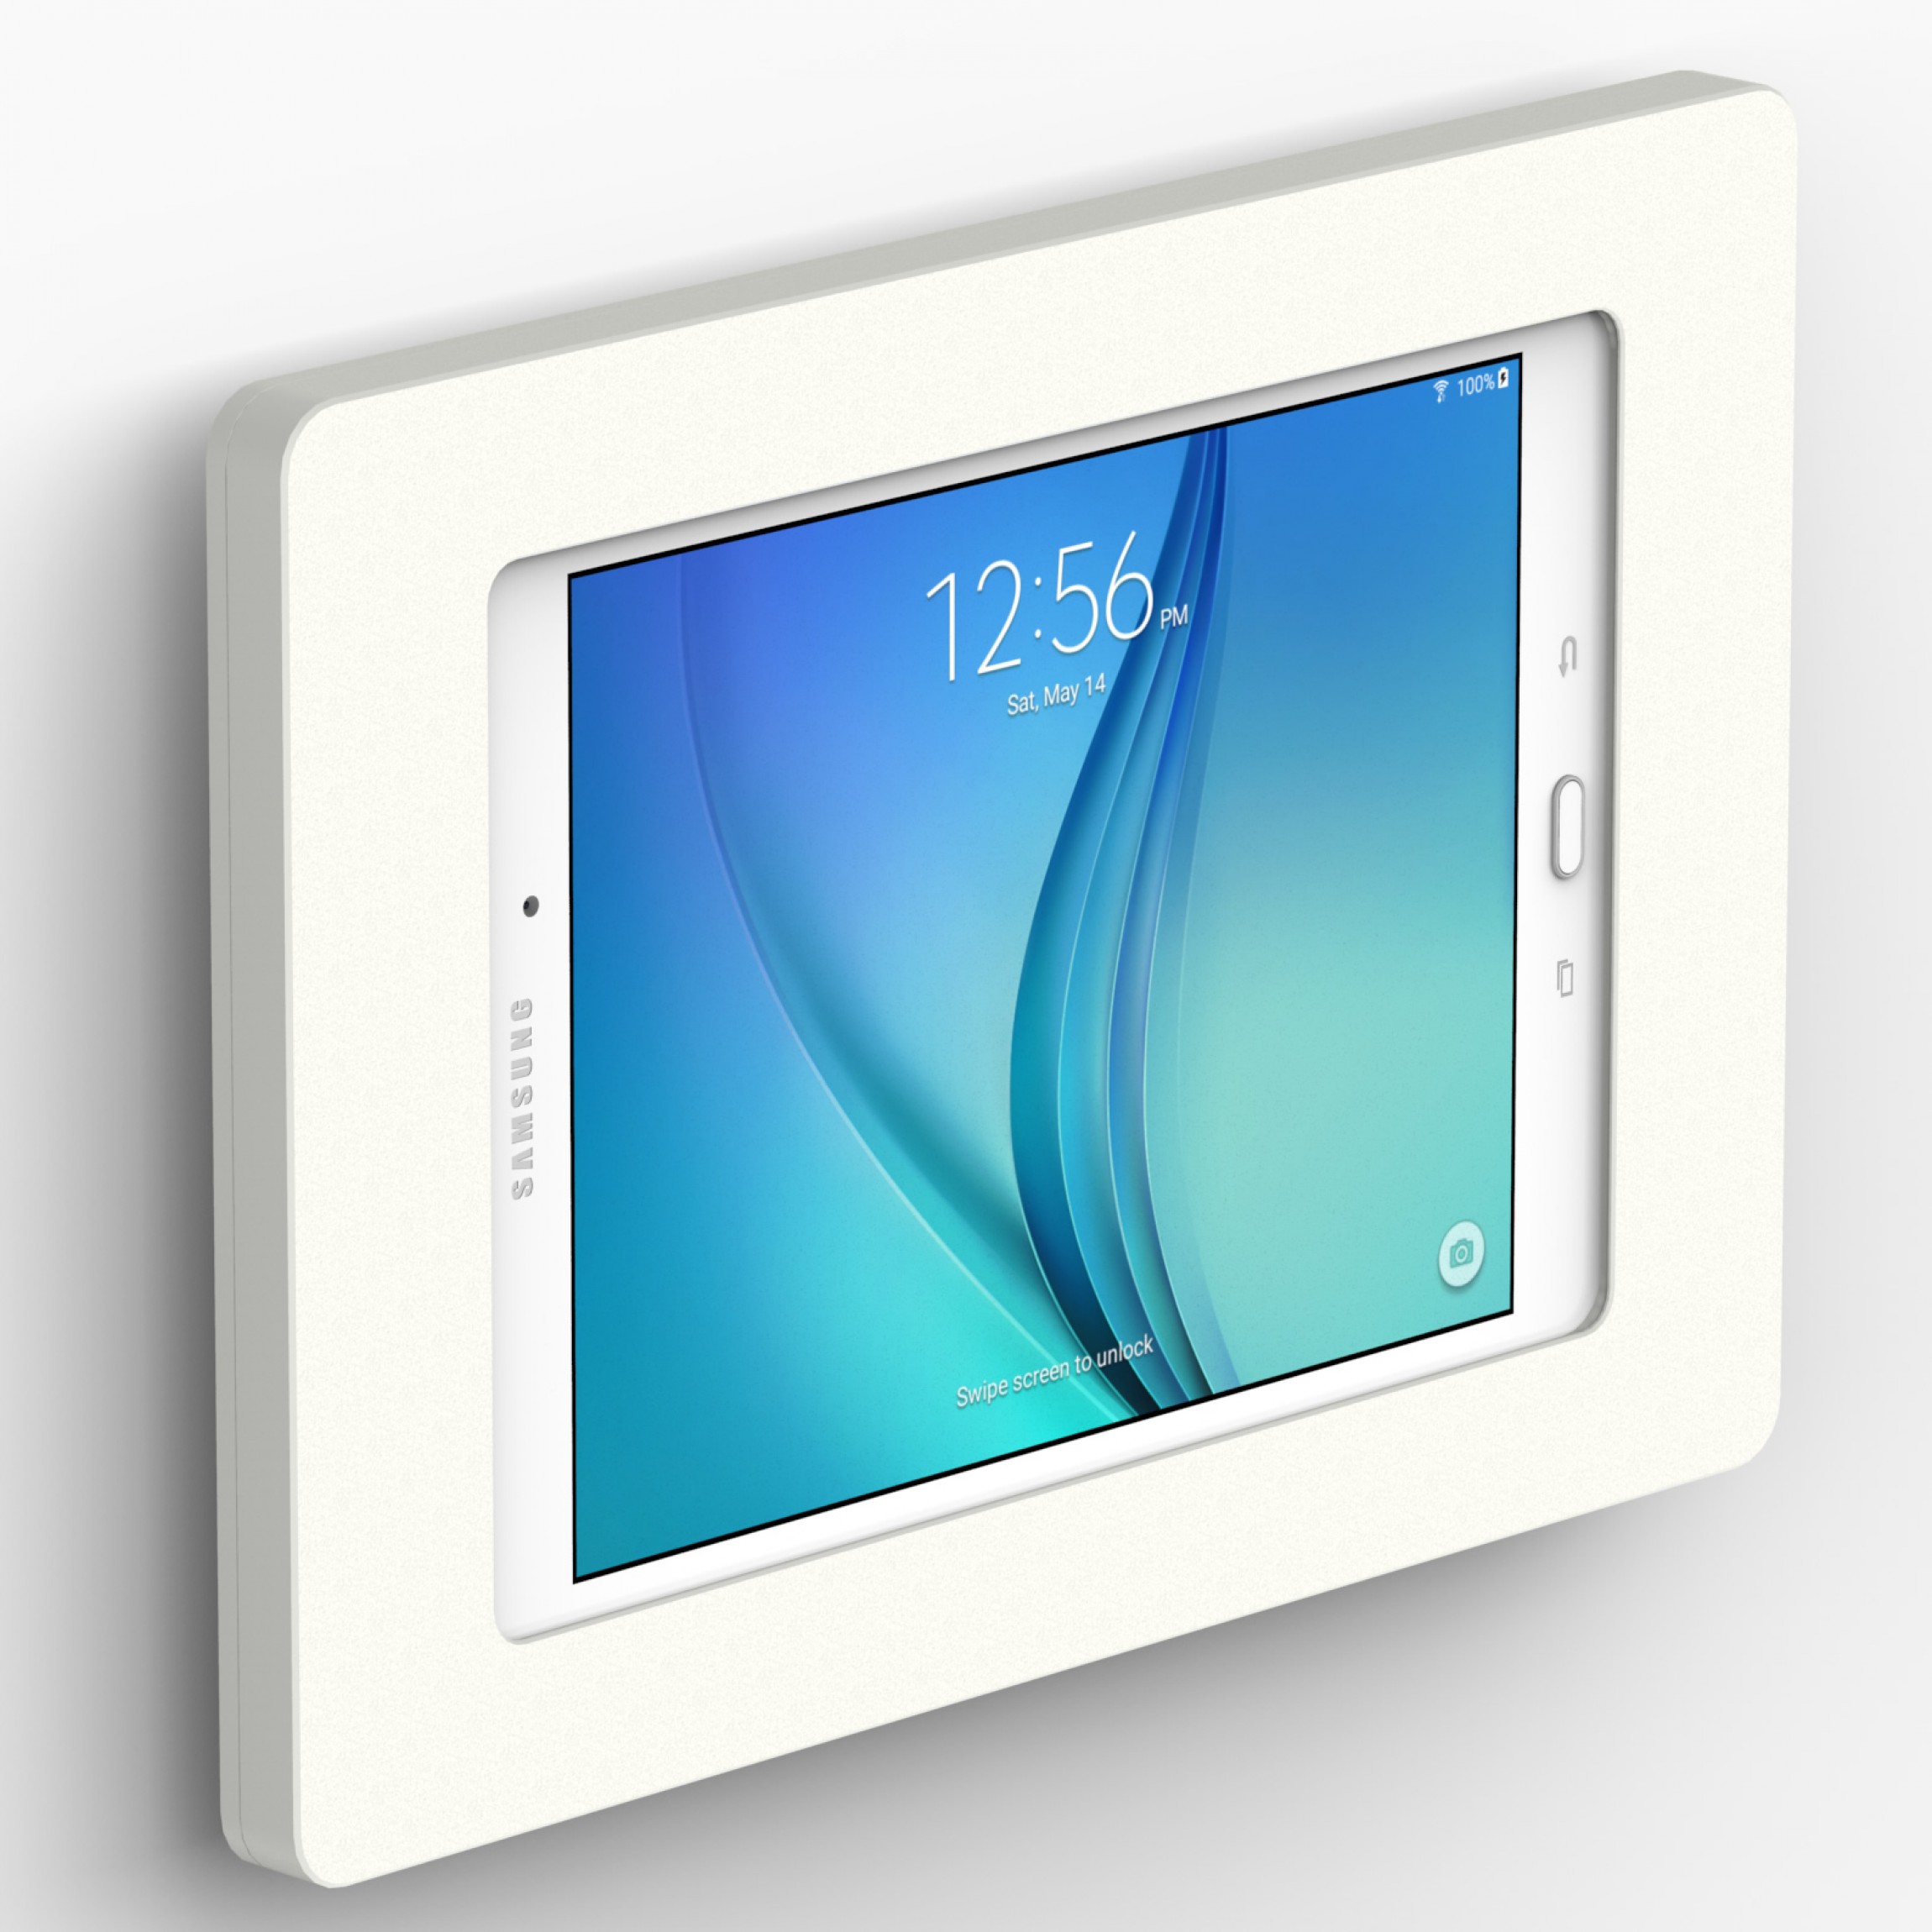 opleggen Dwang commentaar VidaMount Fixed Slim Wall Samsung Galaxy Tab A 9.7 Tablet Mount - White